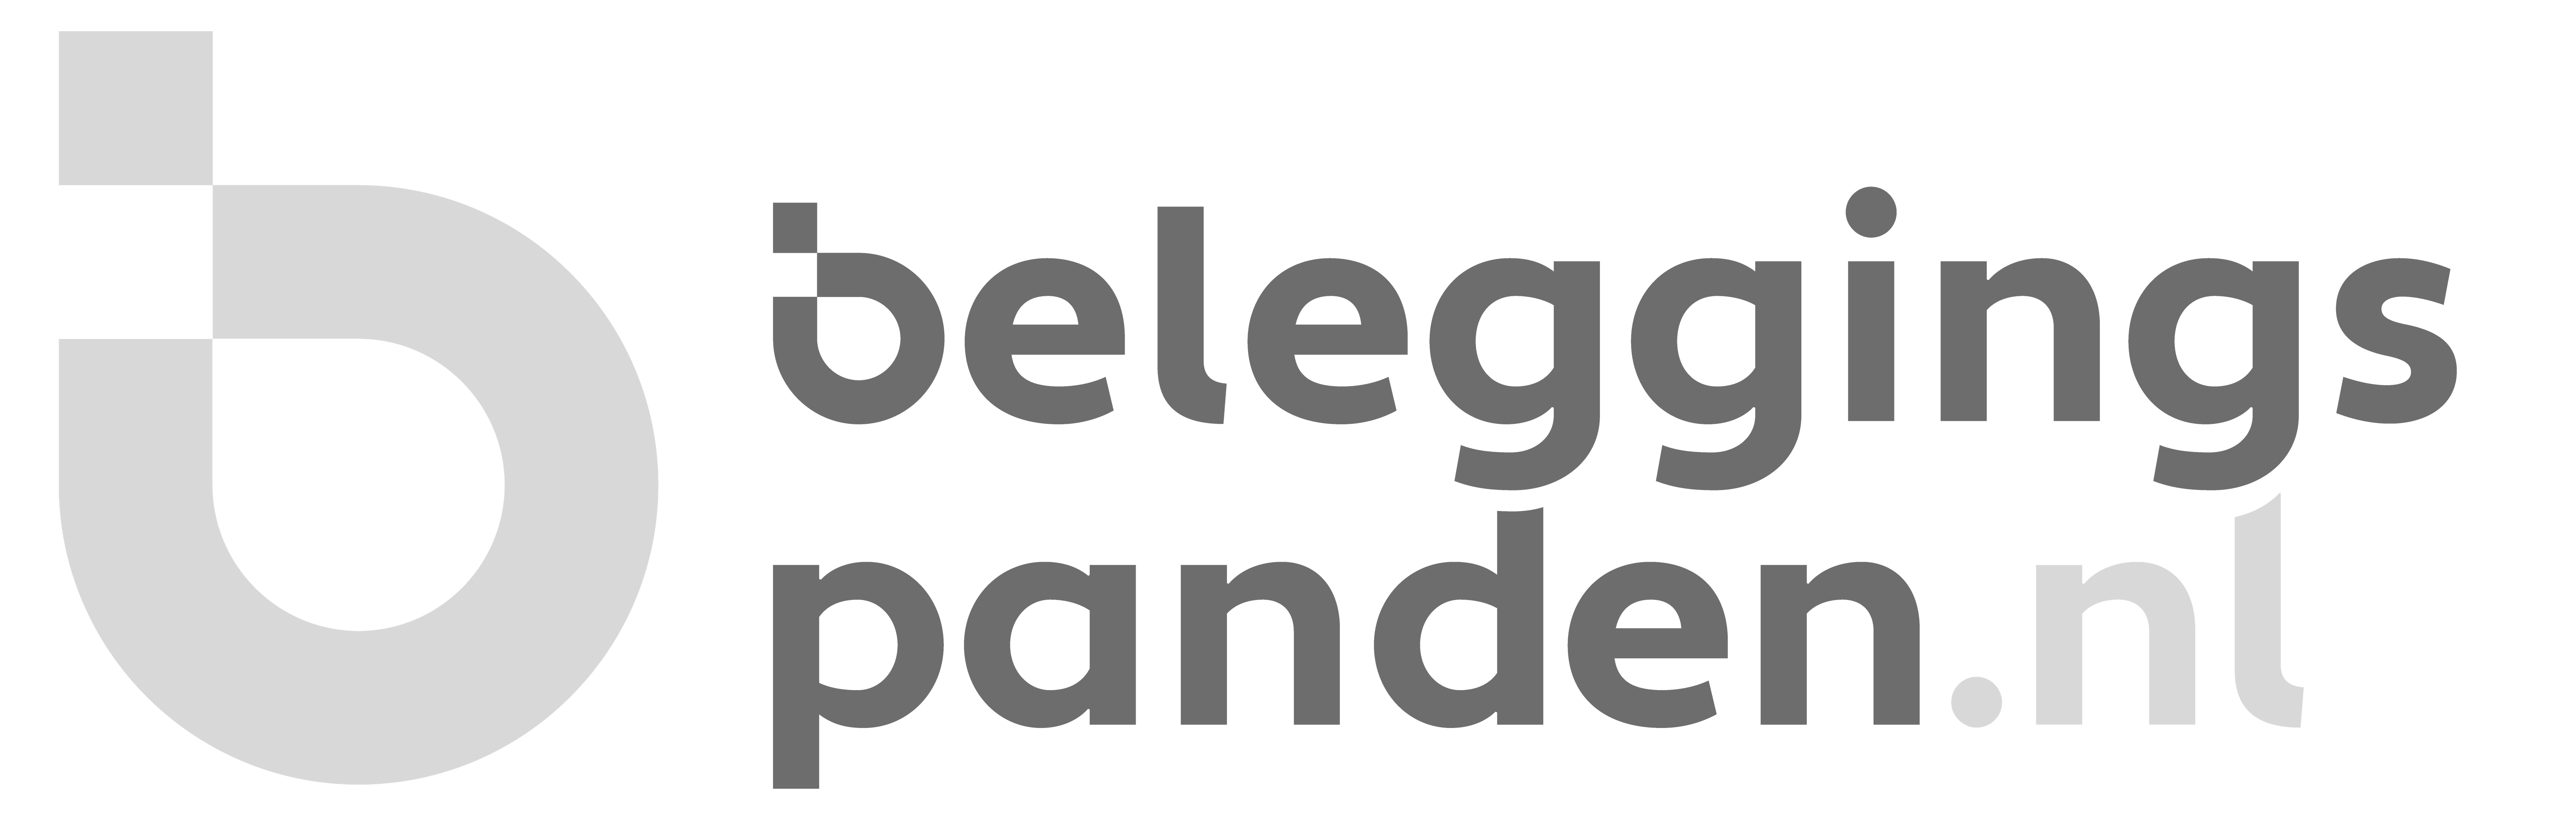 Beleggingspande.nl